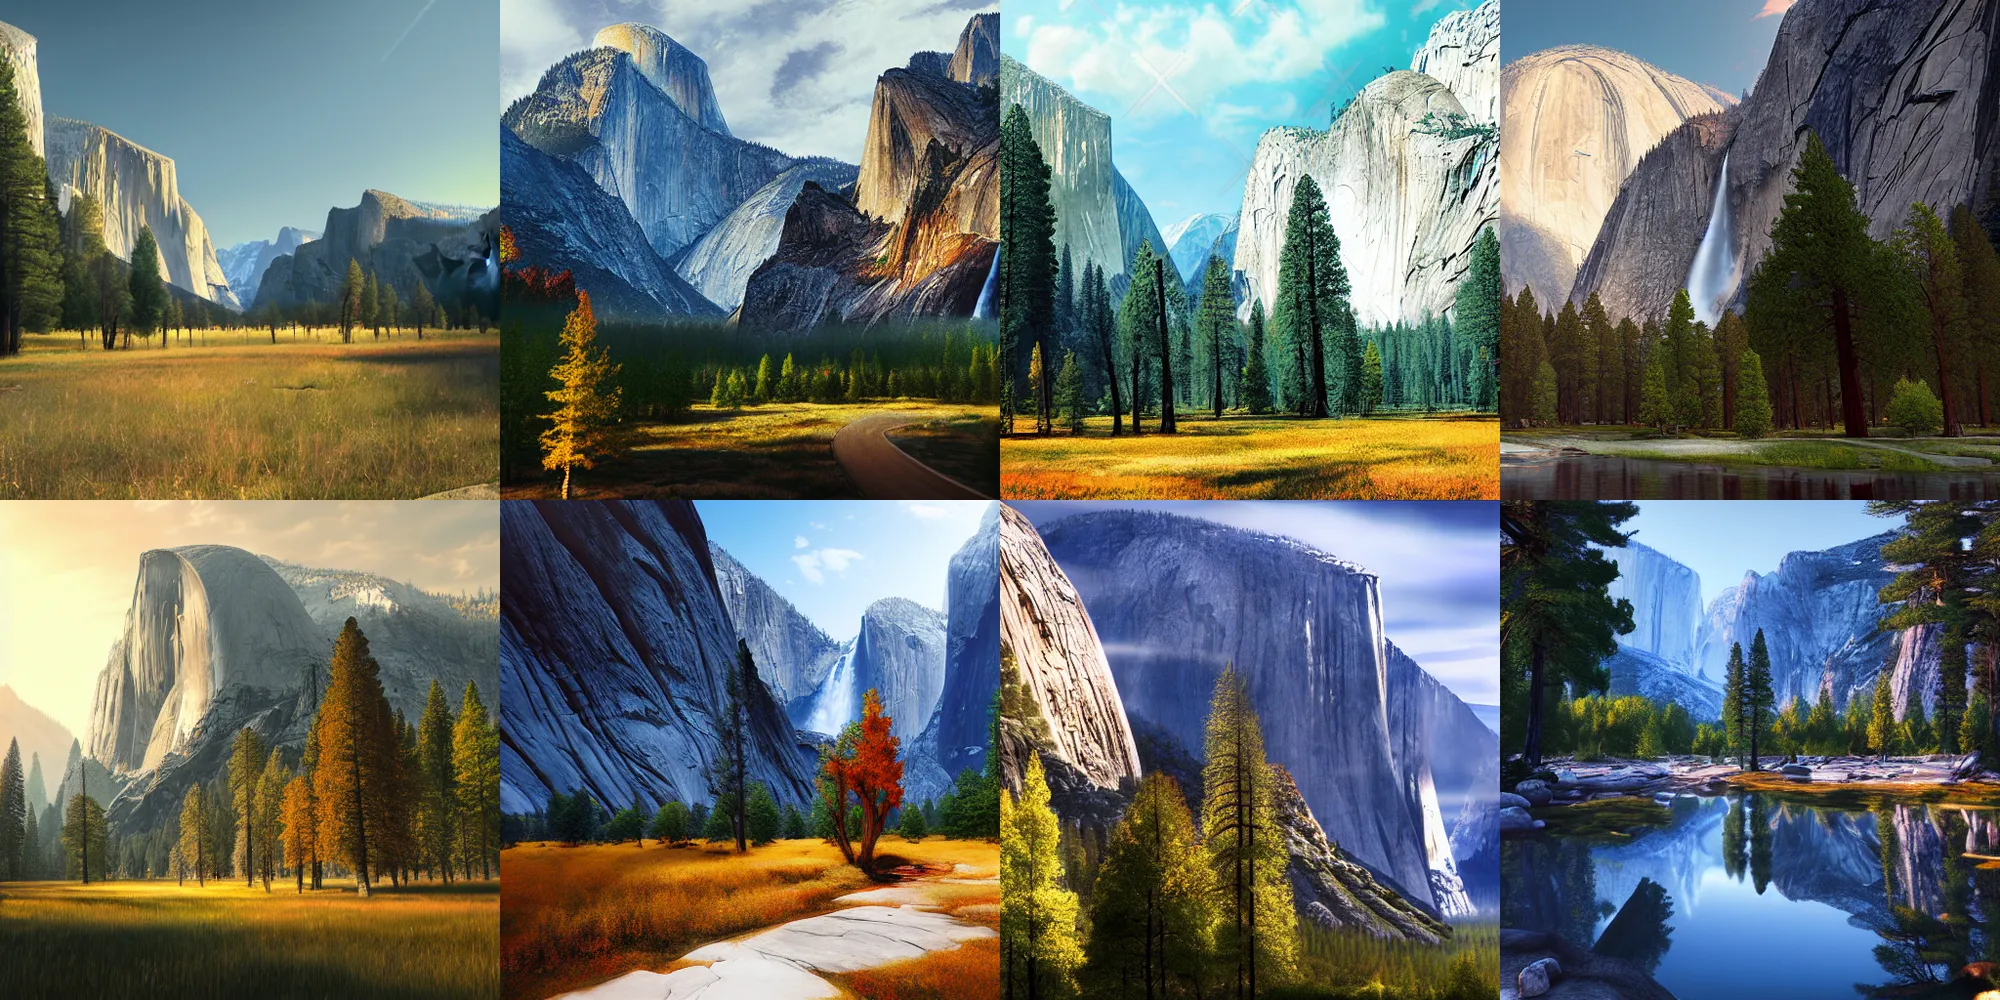 Prompt: photorealistic Octane render of Yosemite National Park by Makoto Shinkai and Hayao Miyazaki